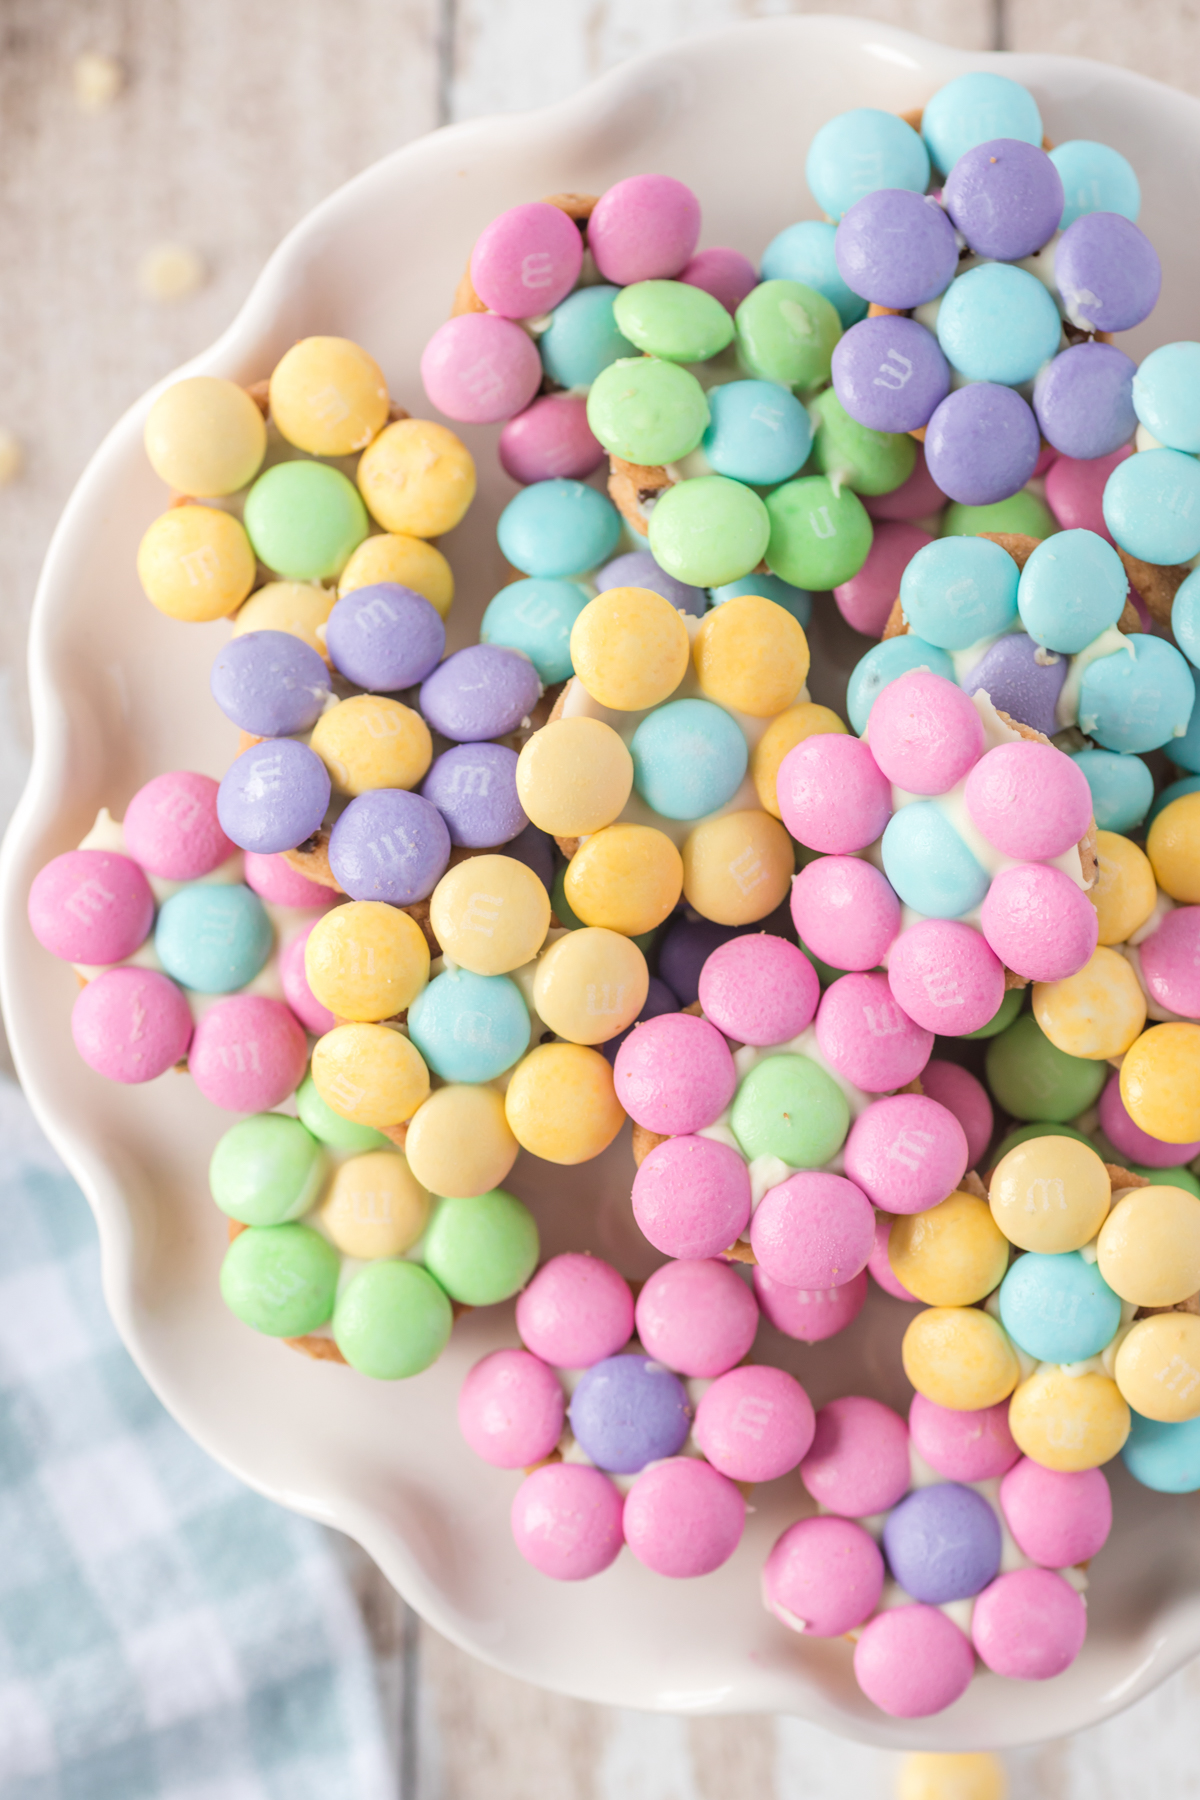 Peanut M&M's Candy Bouquet  Gift Idea for Birthdays, Anniversary